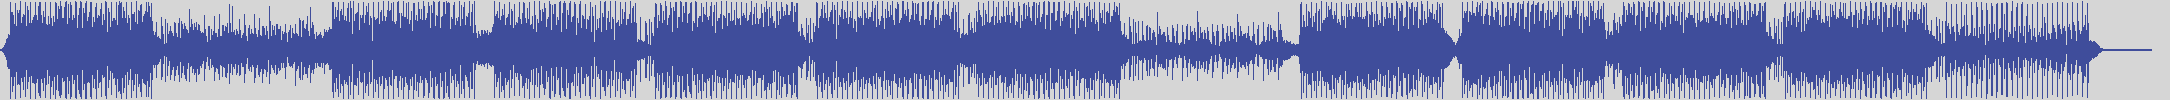 nf_boyz_records [NFY047] Ibeeza Grooves - Saturday I'm Loosing Control [James Altura Mix] audio wave form